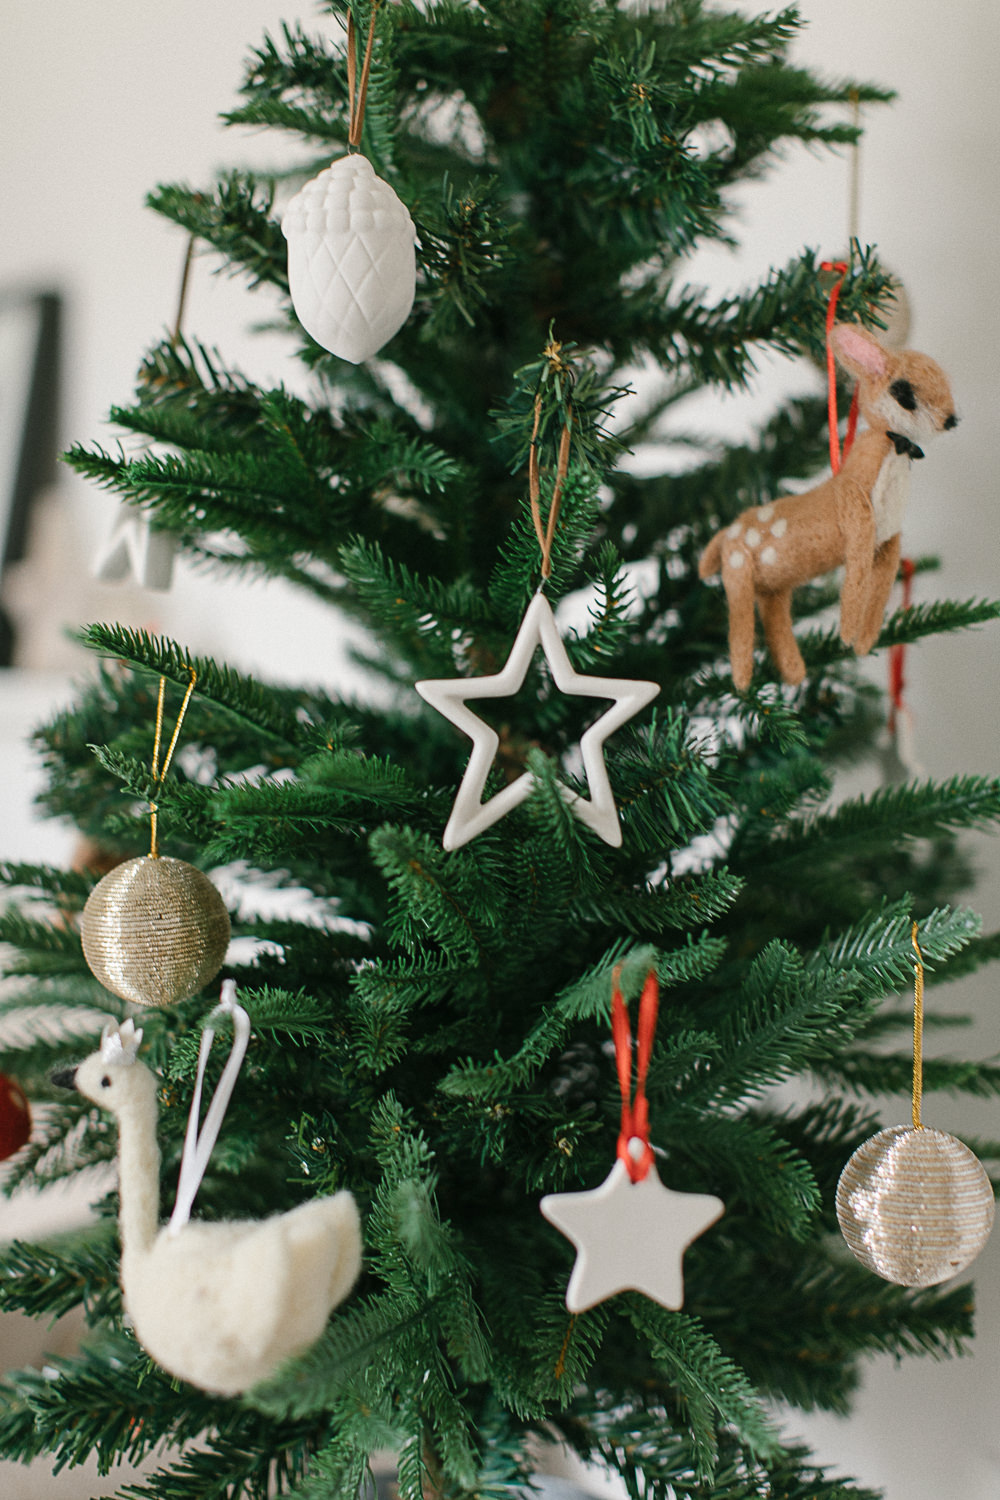 Hobbycraft ceramic star Christmas tree decorations